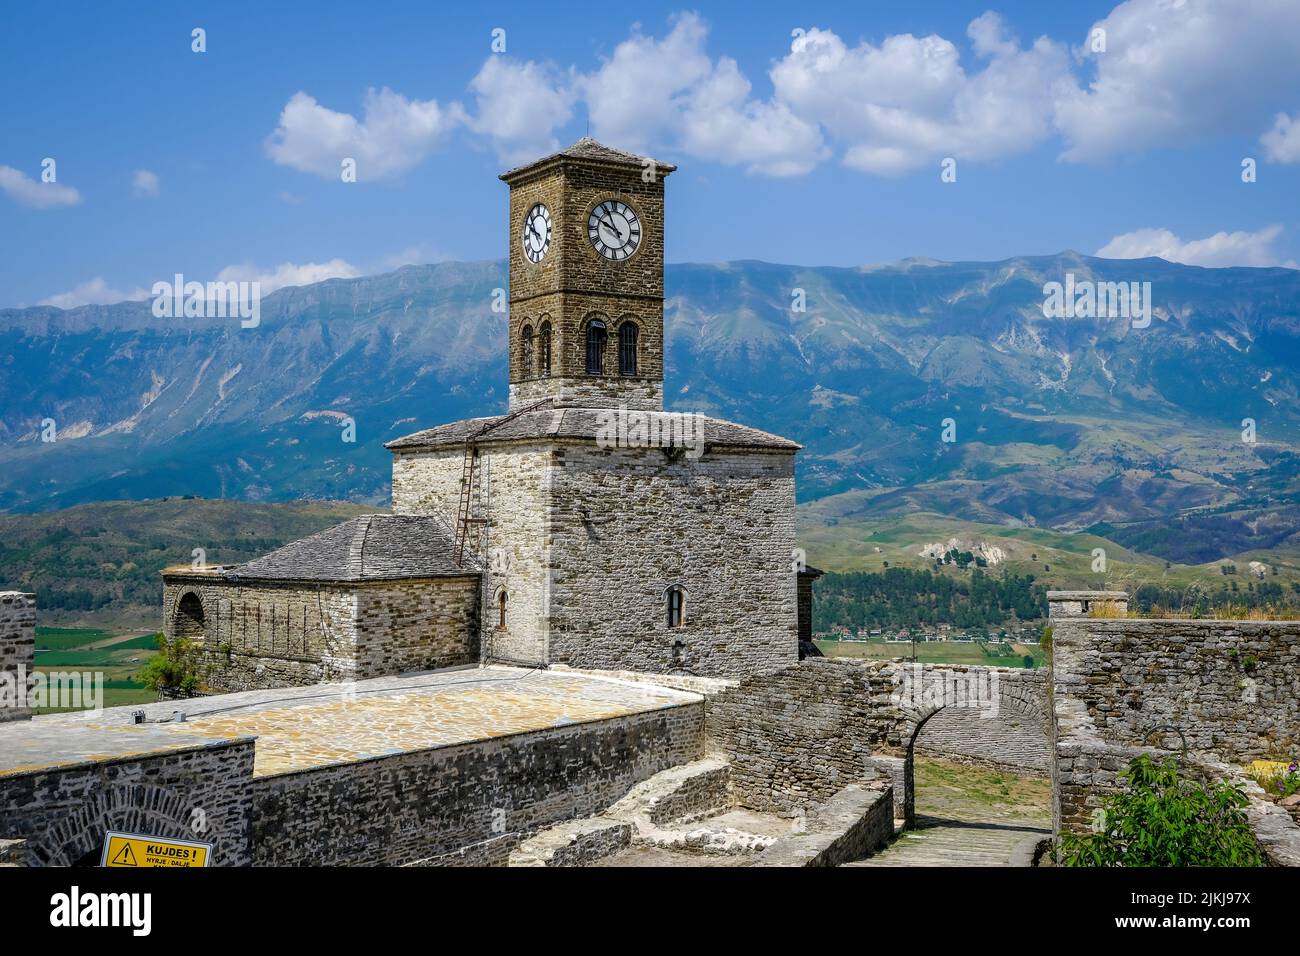 City of Gjirokastra, Gjirokastra, Albania - Clock Tower, Castle of the Mountain City of Gjirokastra, UNESCO World Heritage Site. Drinos Valley. Stock Photo